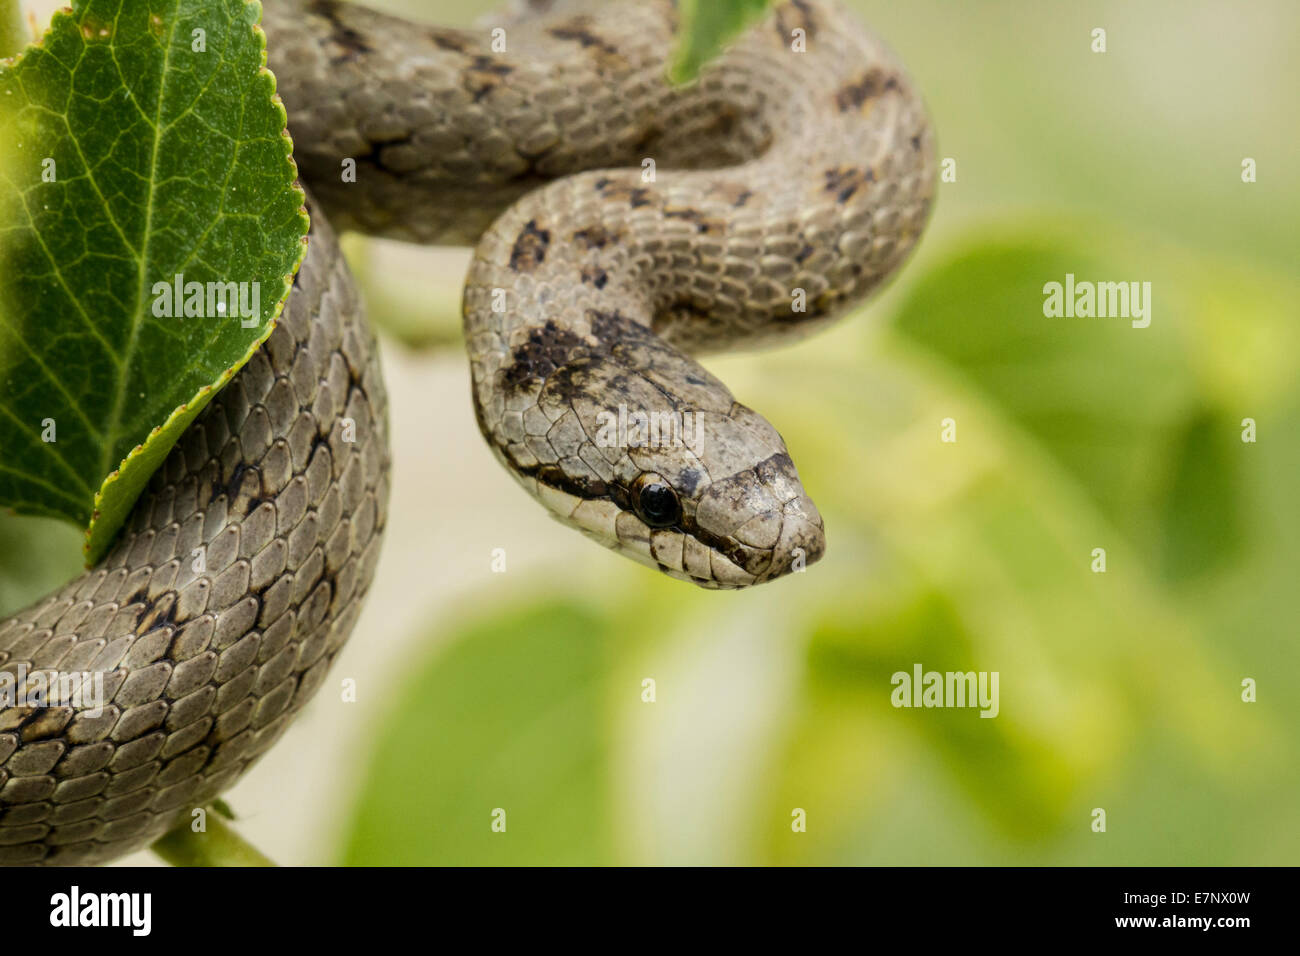 Animal, Snake, Reptilia, Coronella austriaca, smooth snake, Switzerland Stock Photo